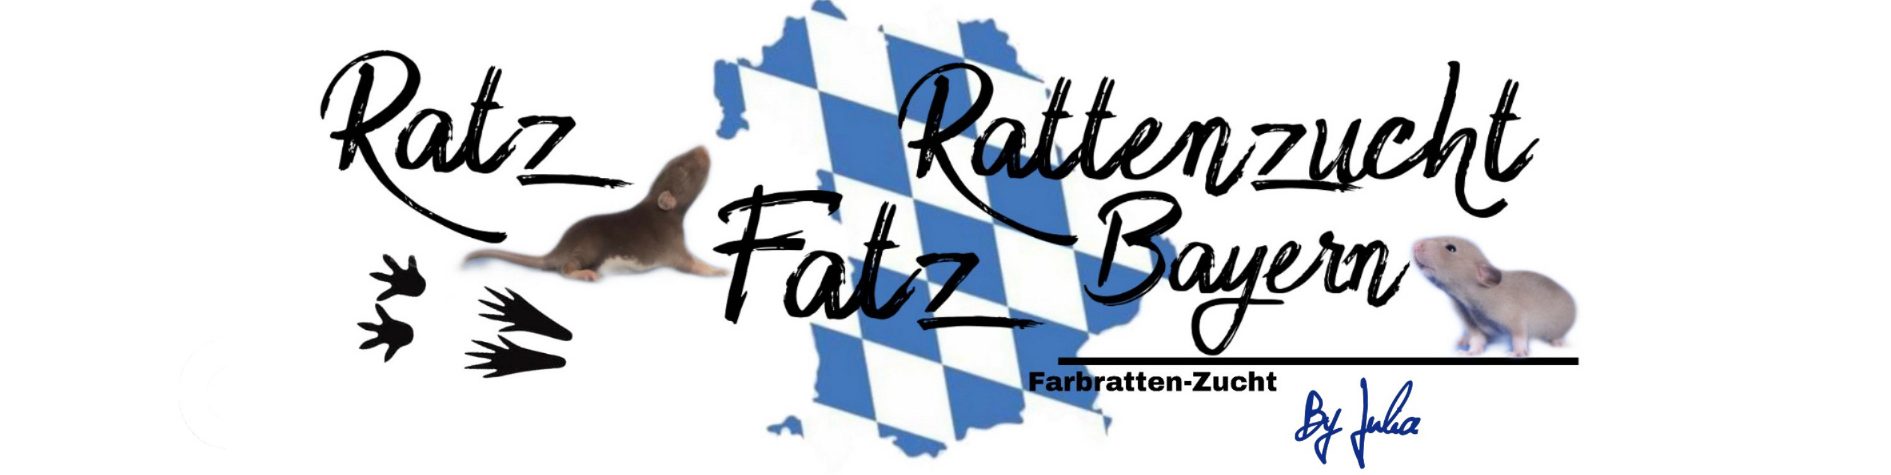 Ratz Fatz Rattenzucht Bayern